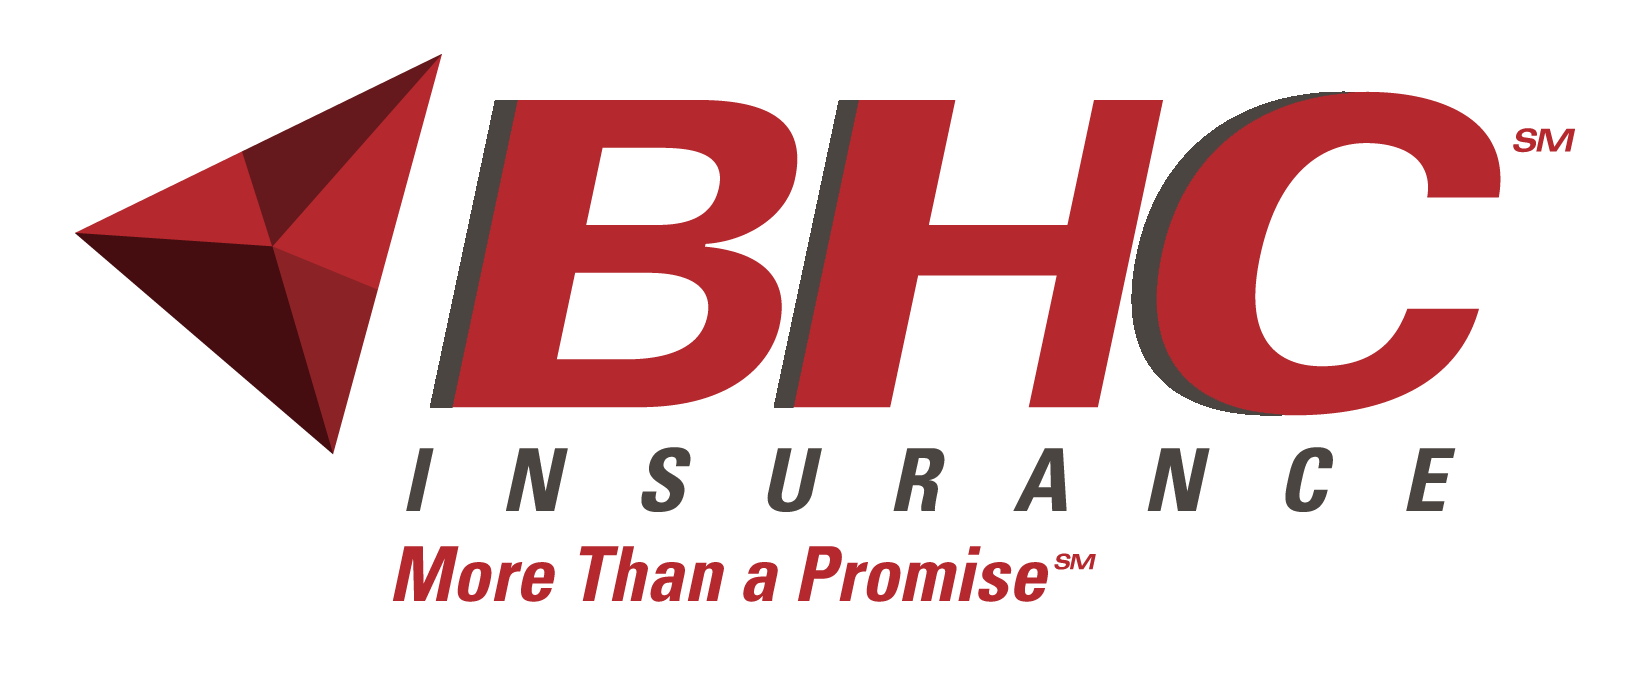 BHC Insurance